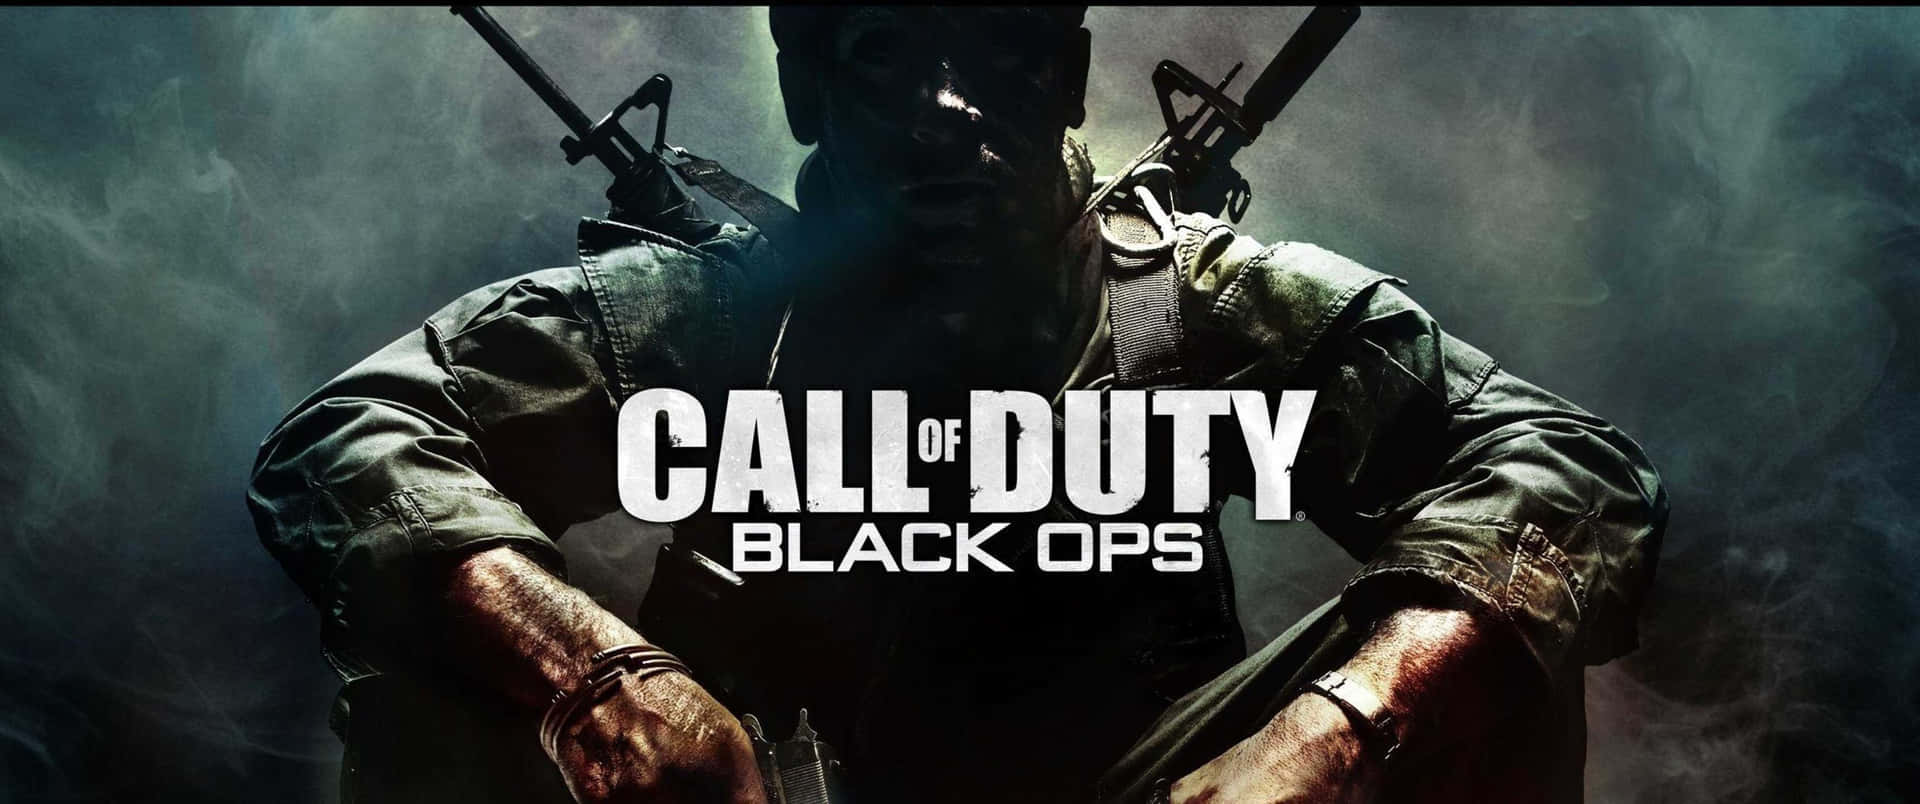 100 3440x1440p Fondods De Call Of Duty Black Ops 4 Wallpapers